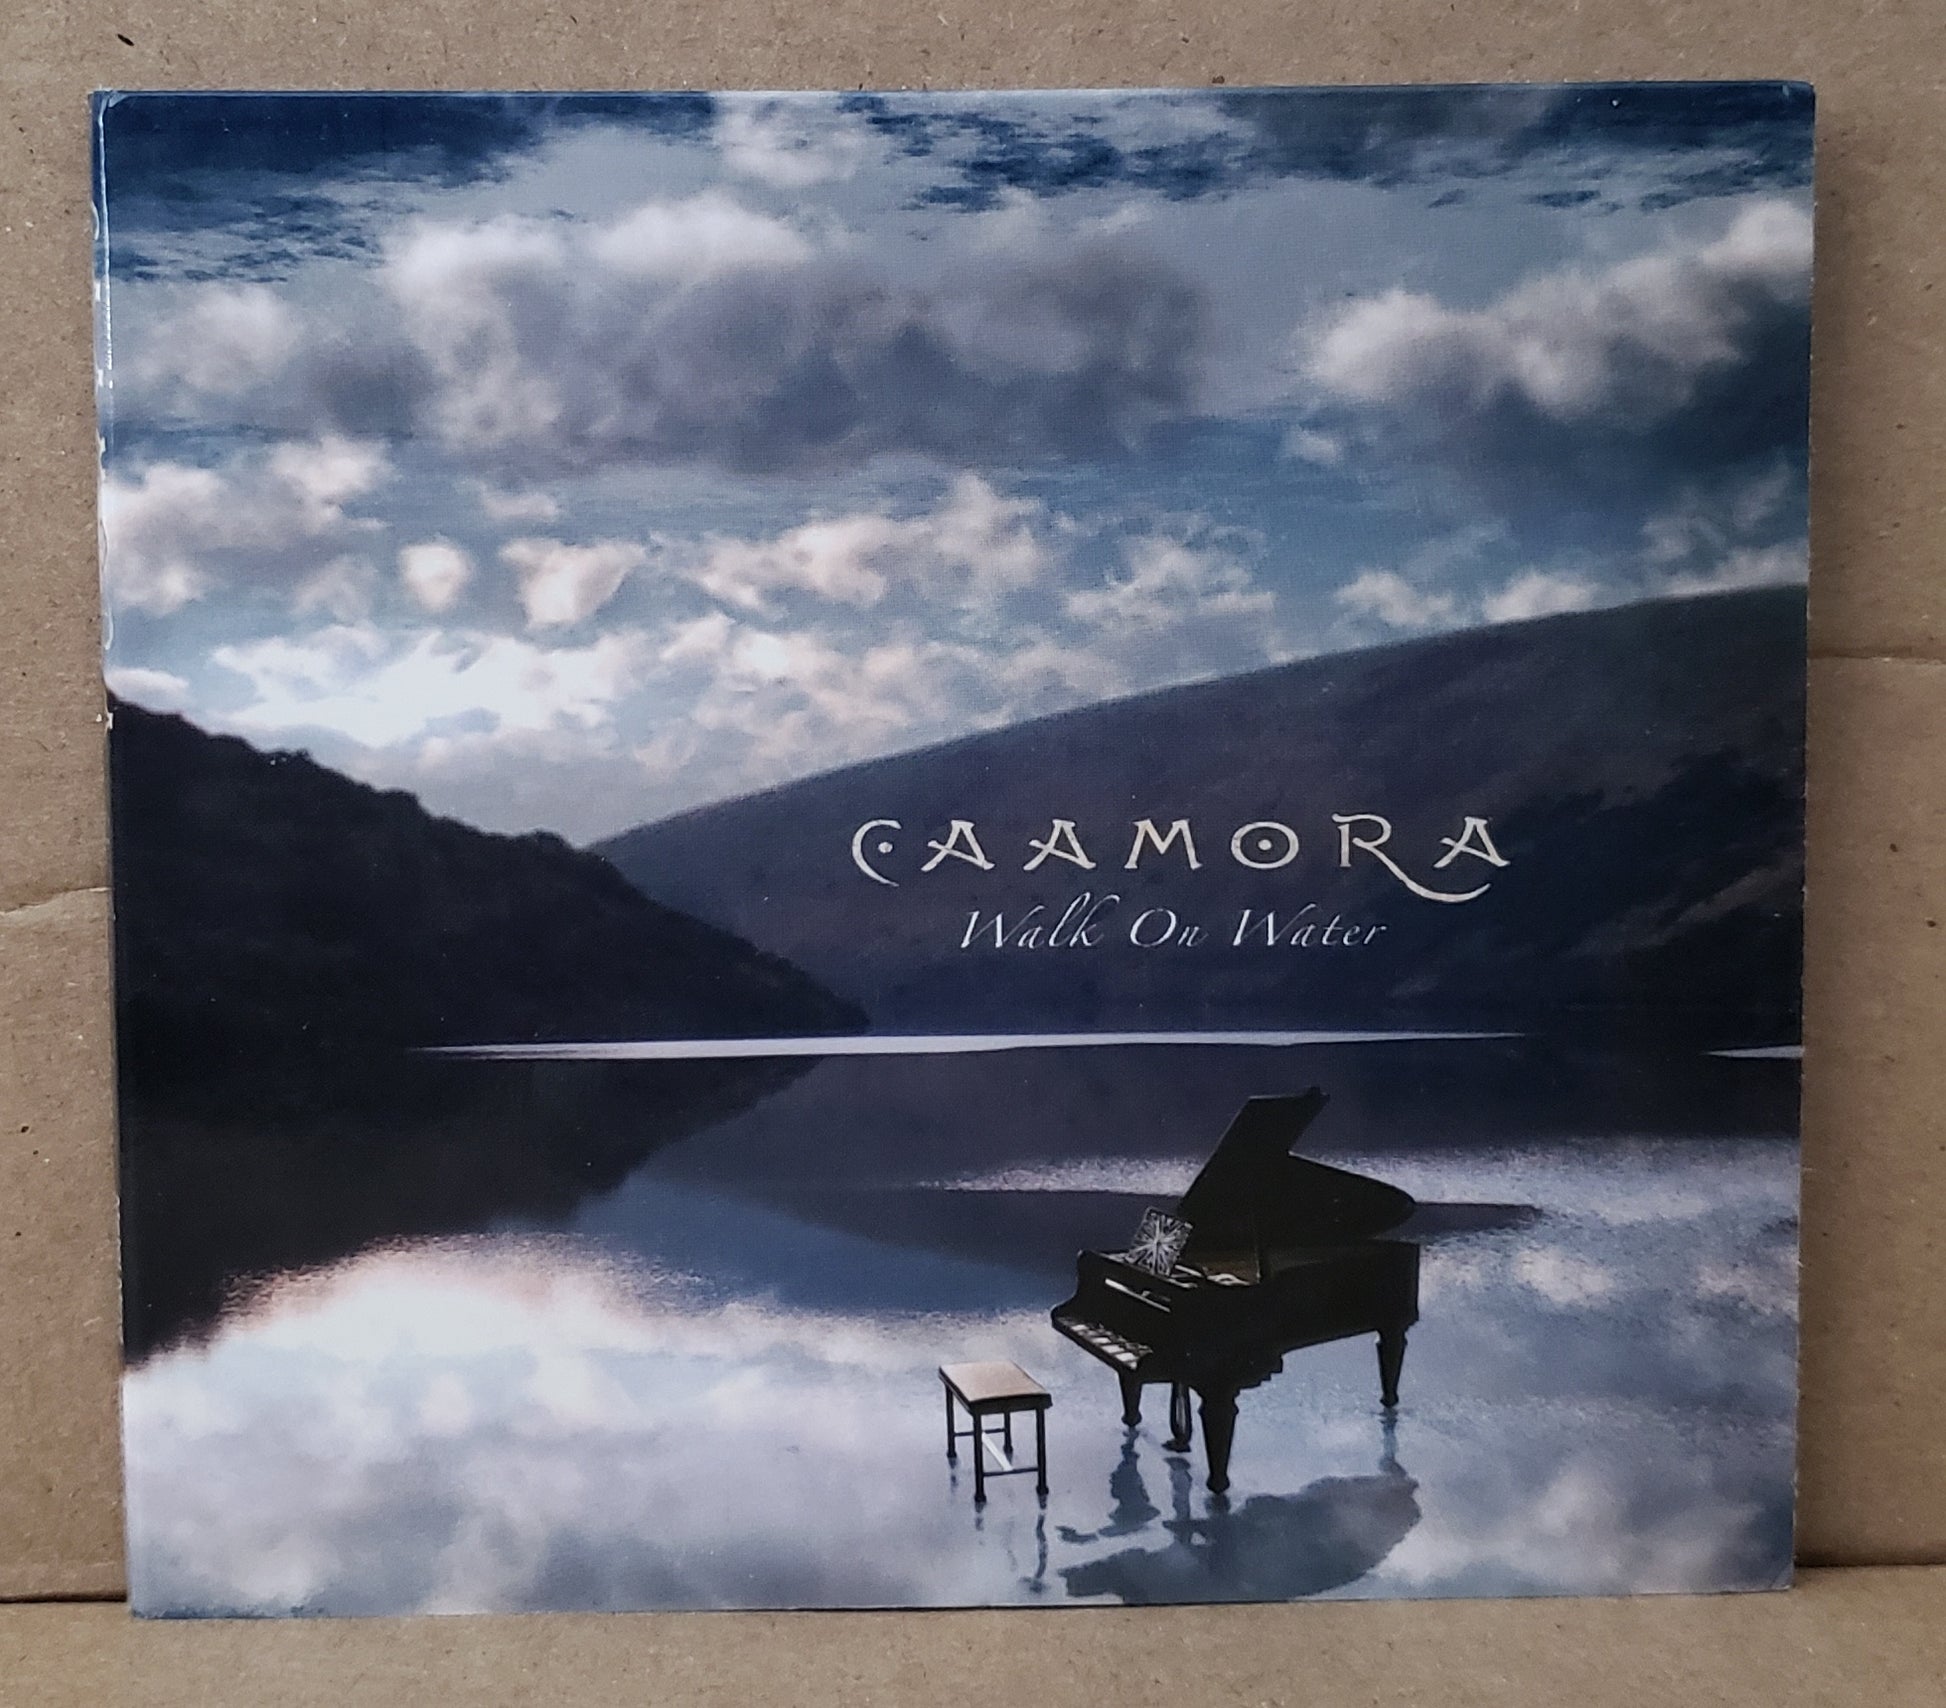 Caamora - Walk on Water [2007 EP] [Used CD]